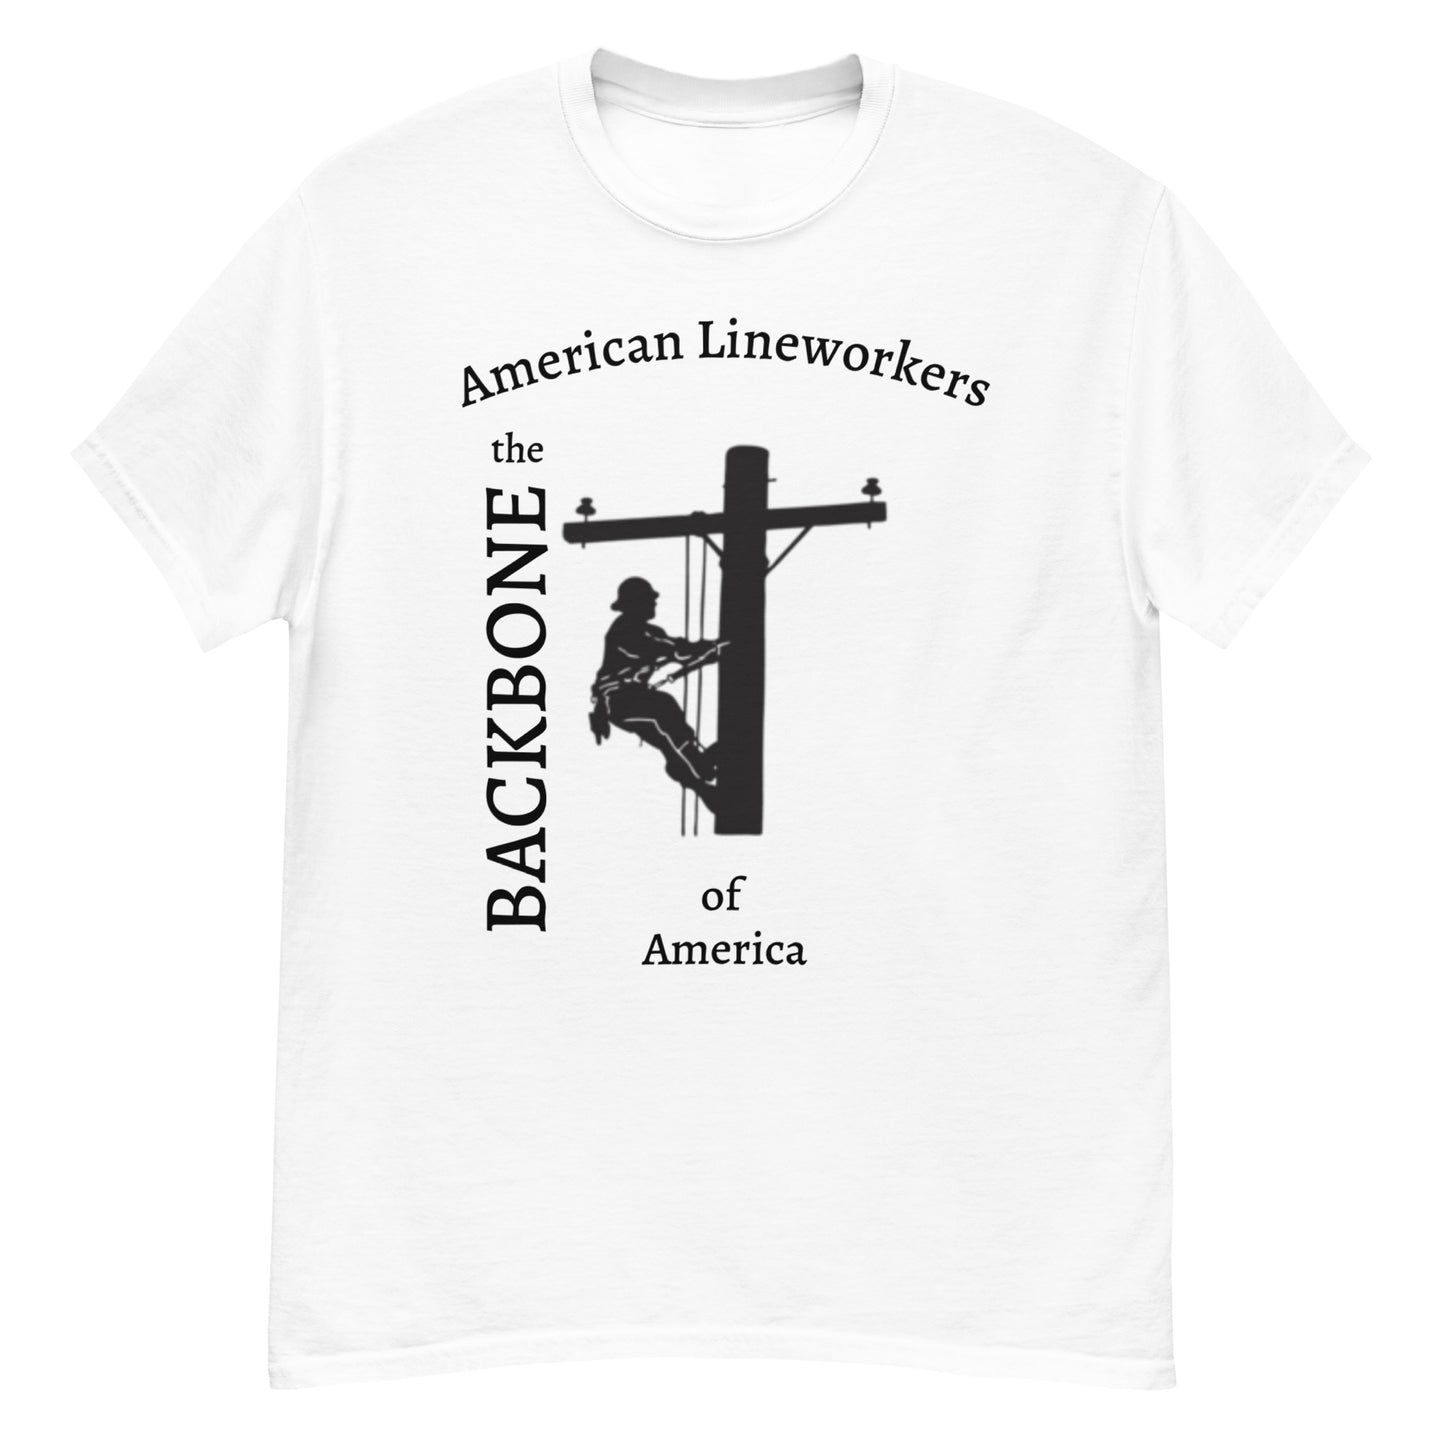 American Lineworkers - Backbone of America classic tee